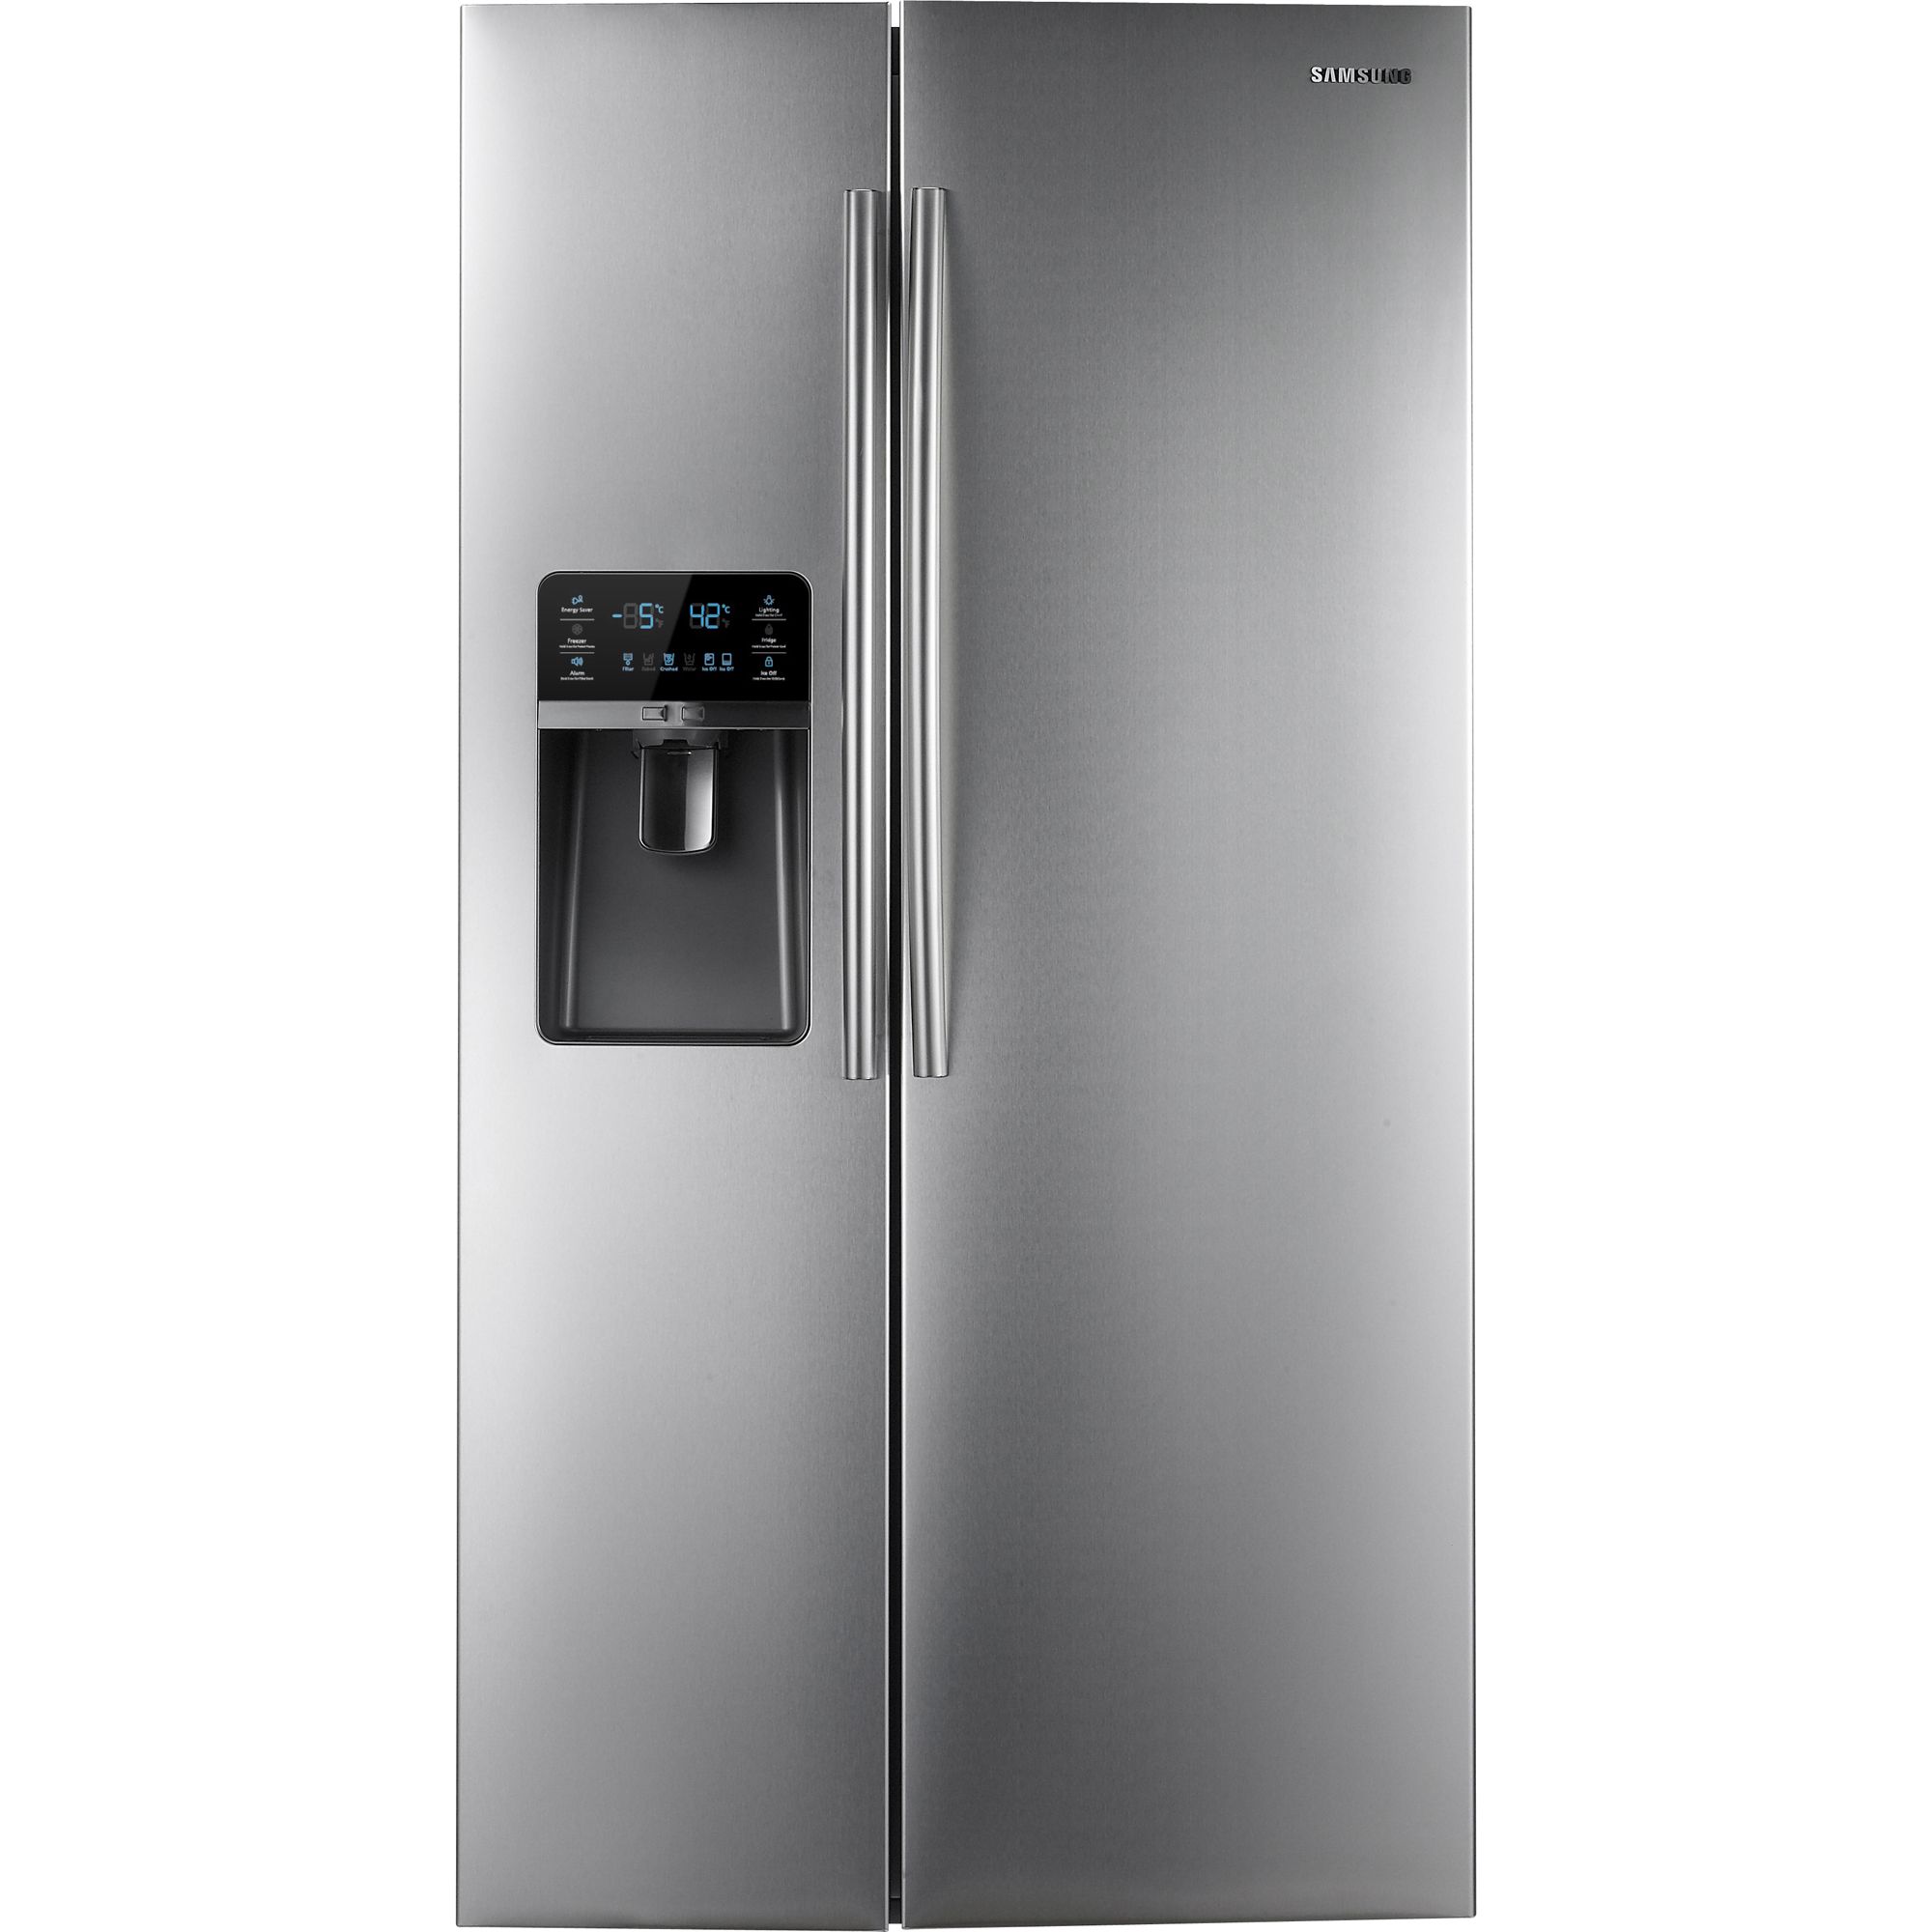 Samsung 30.0 cu. ft. Side-by-Side Refrigerator Stainless Steel | Shop Samsung Side By Side Stainless Steel Refrigerator